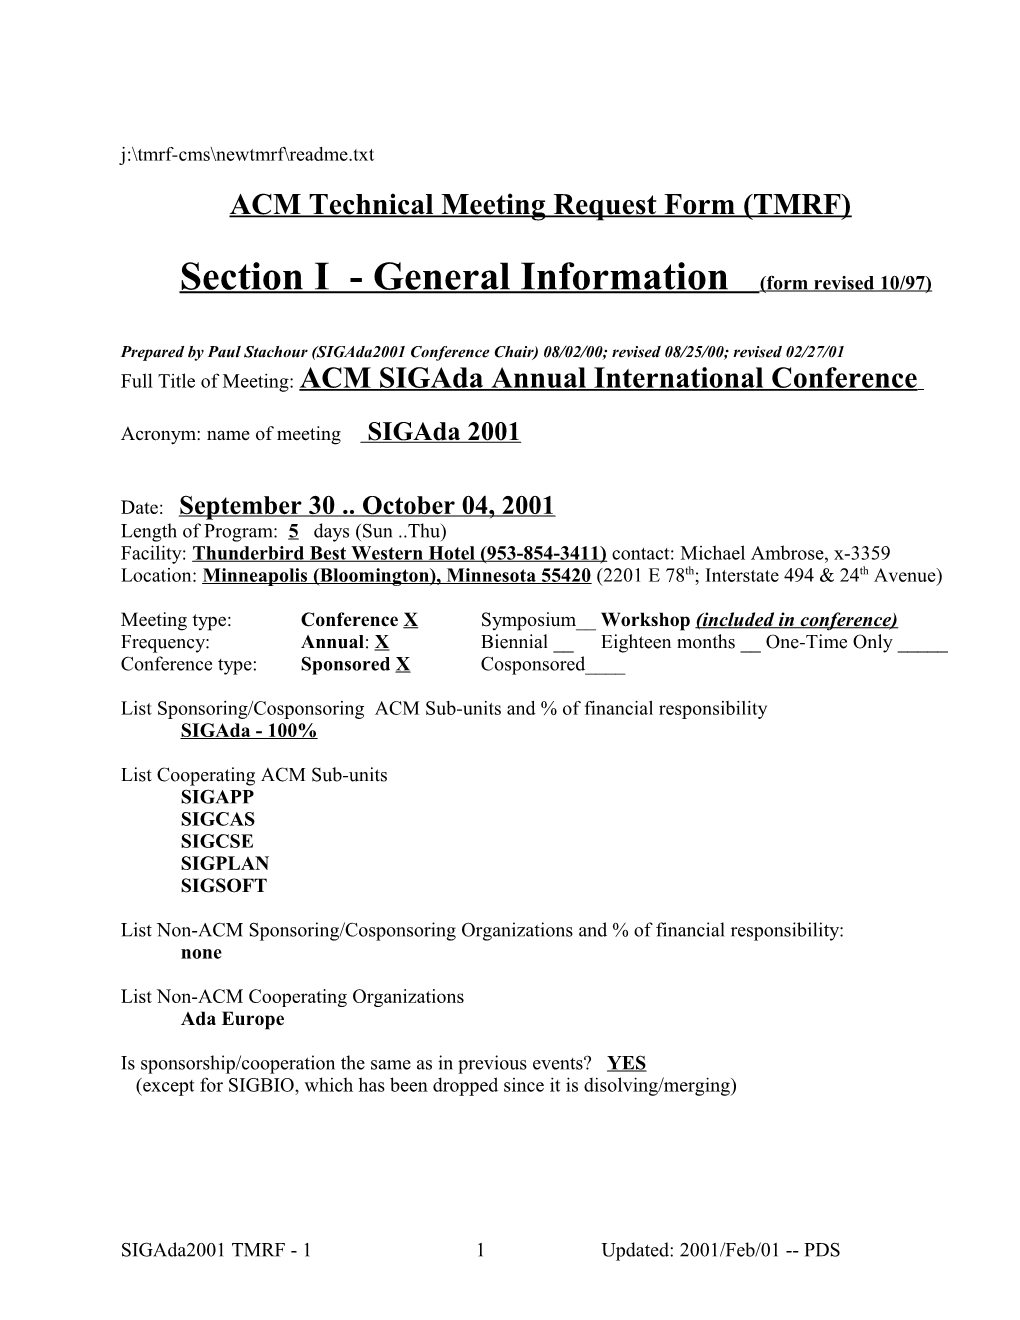 ACM Technical Meeting Request Form (TMRF)